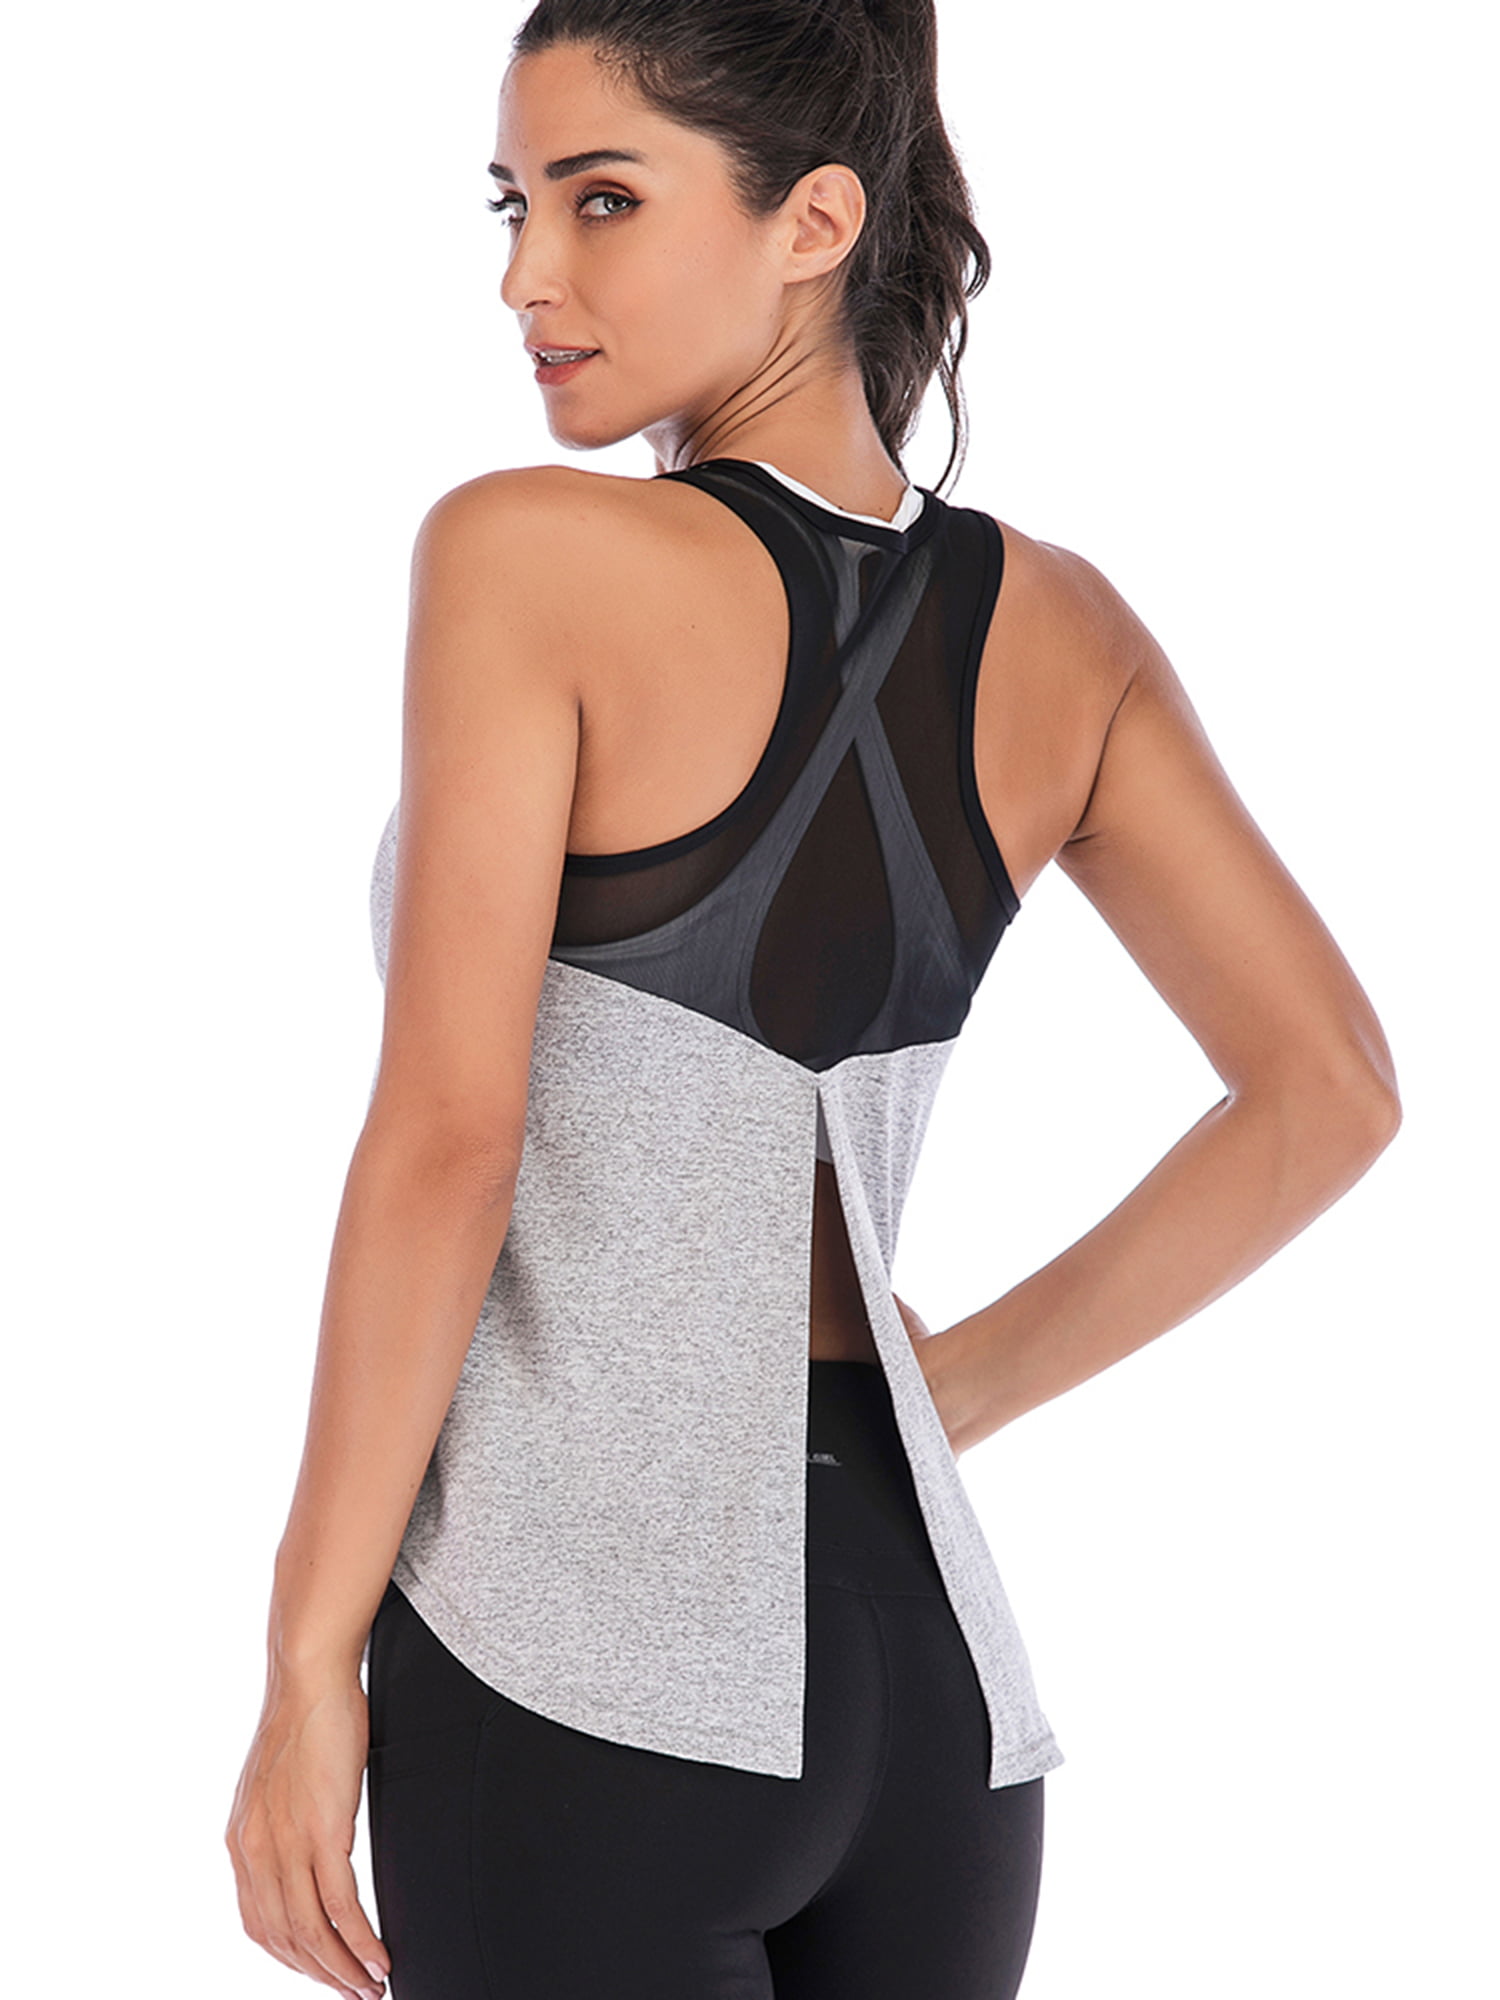 123 Pcs Open Back Sport Vest Workout Tank Tops For Women Athletic Exercise Yoga Tops Running